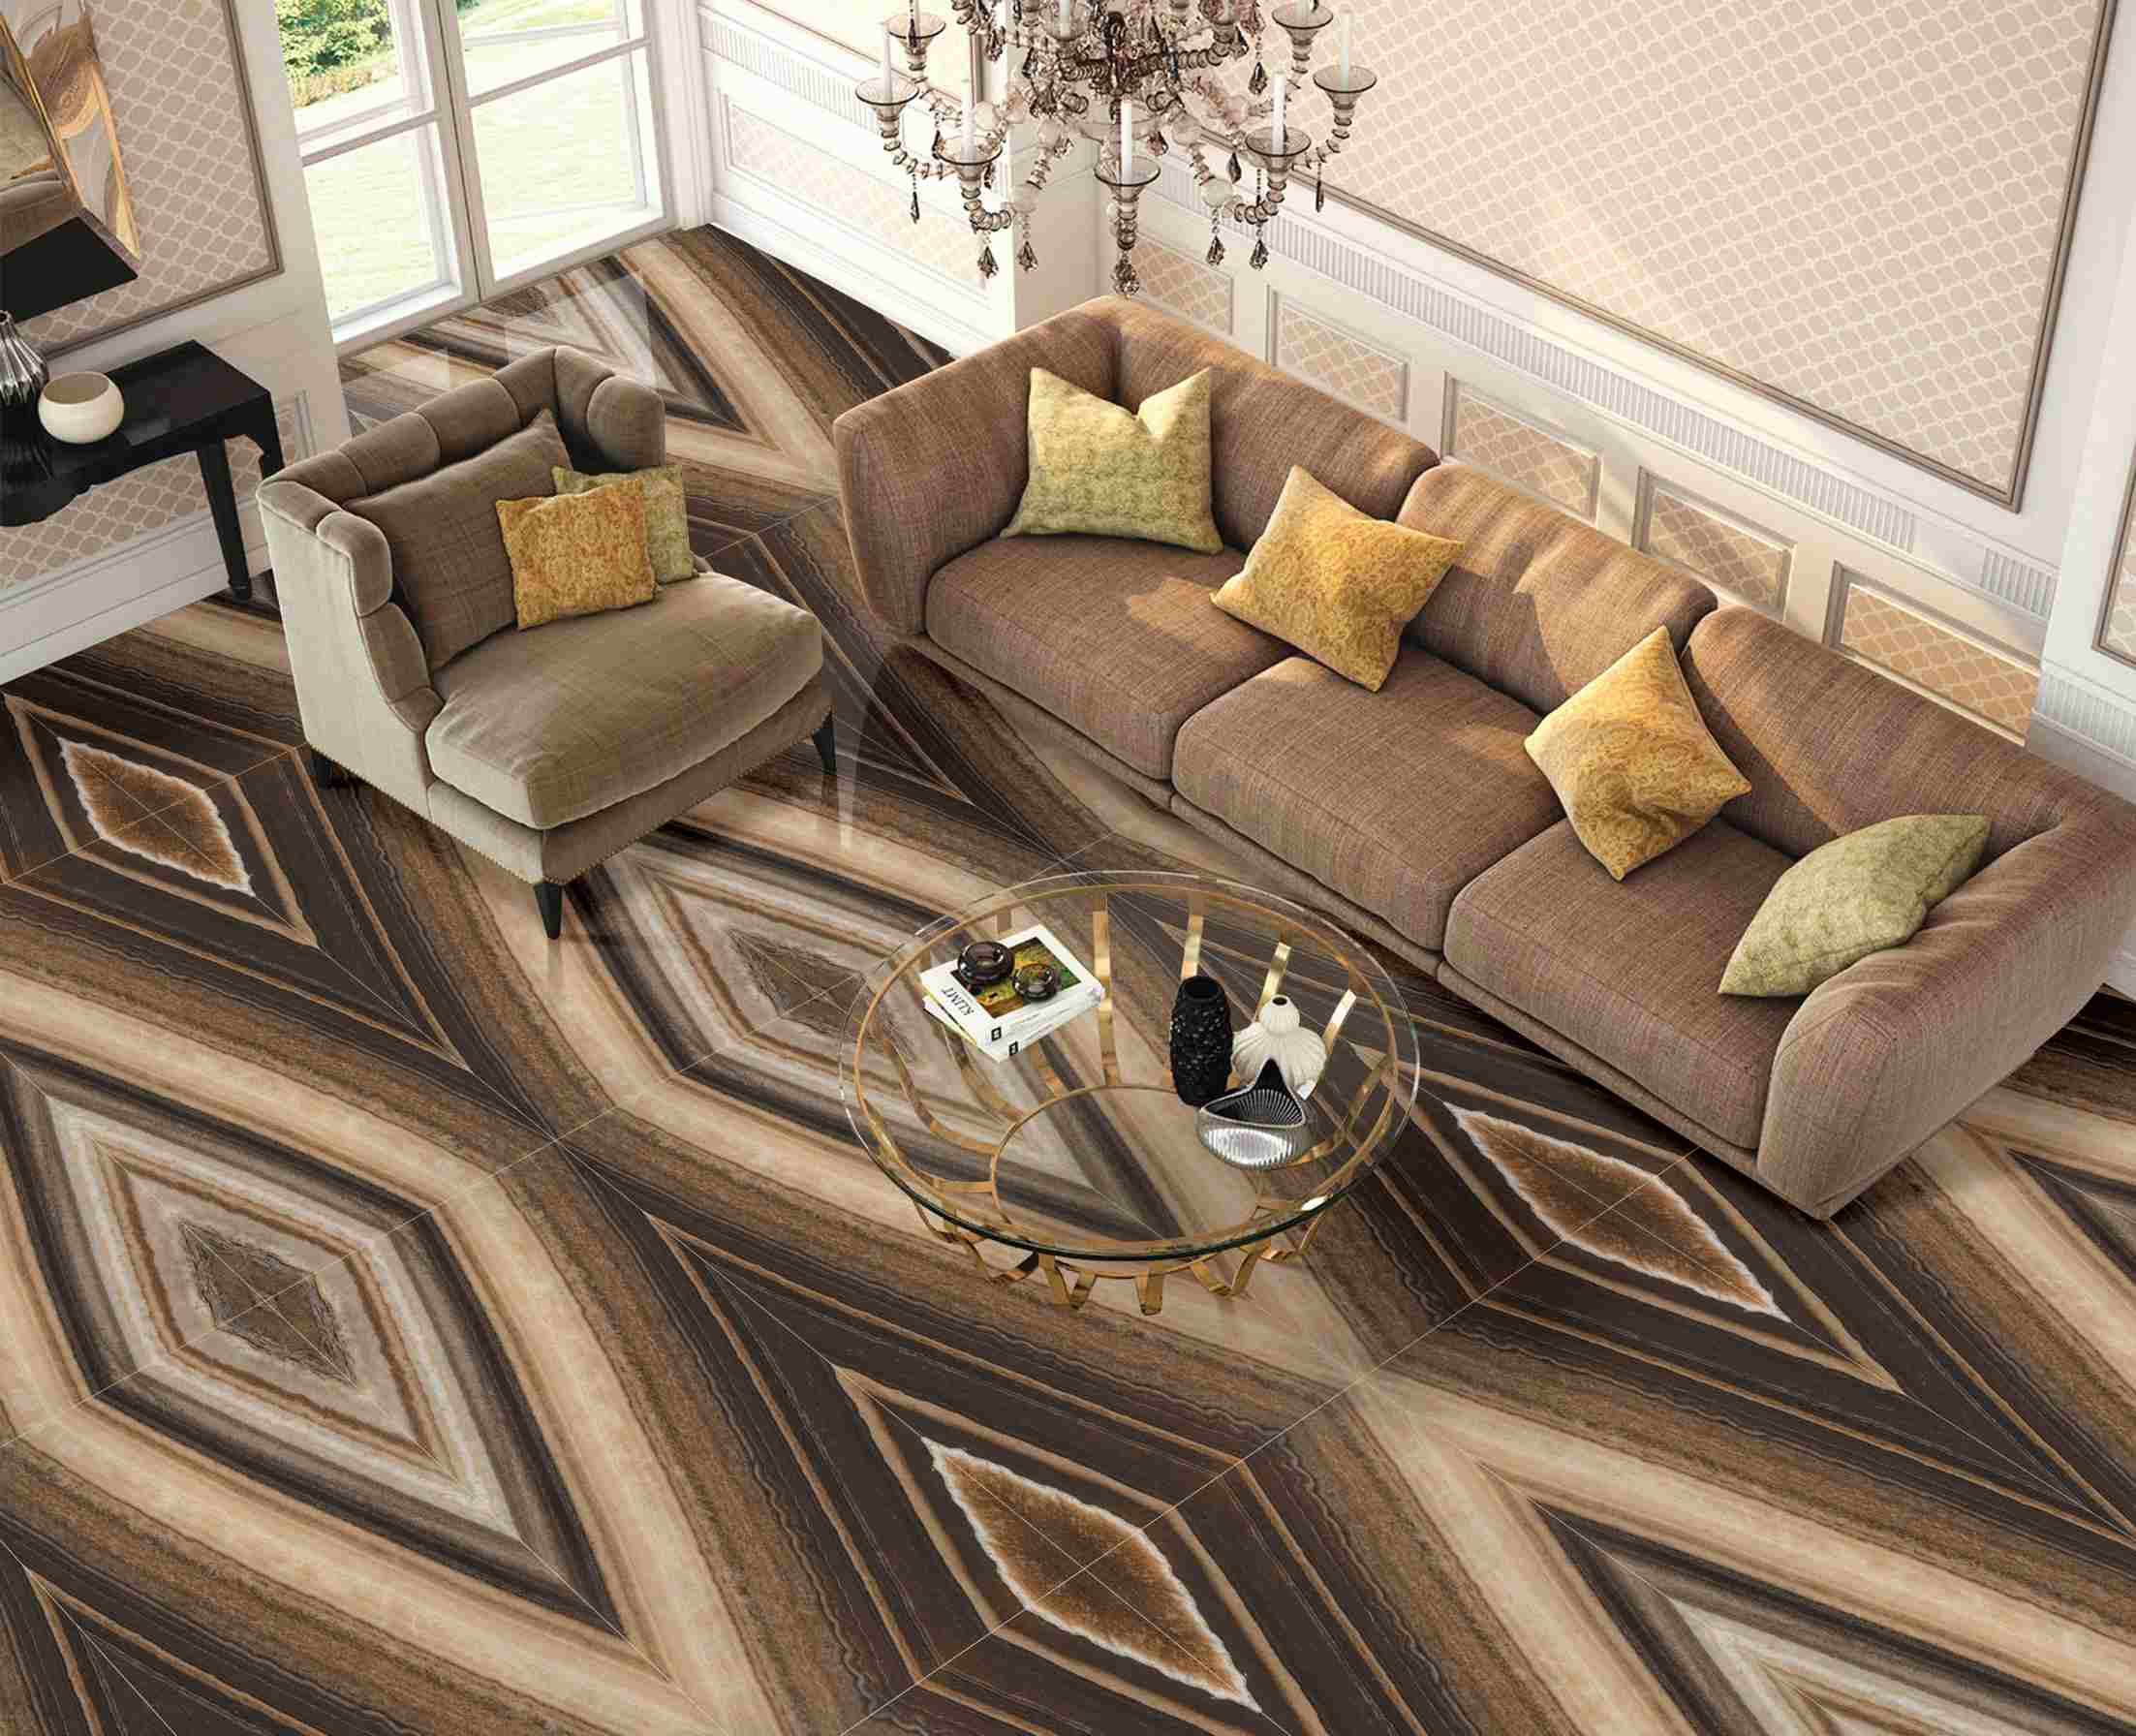 patterned floor tiles in shades of brown, ceramic porcelain tiles, vitrified tiles